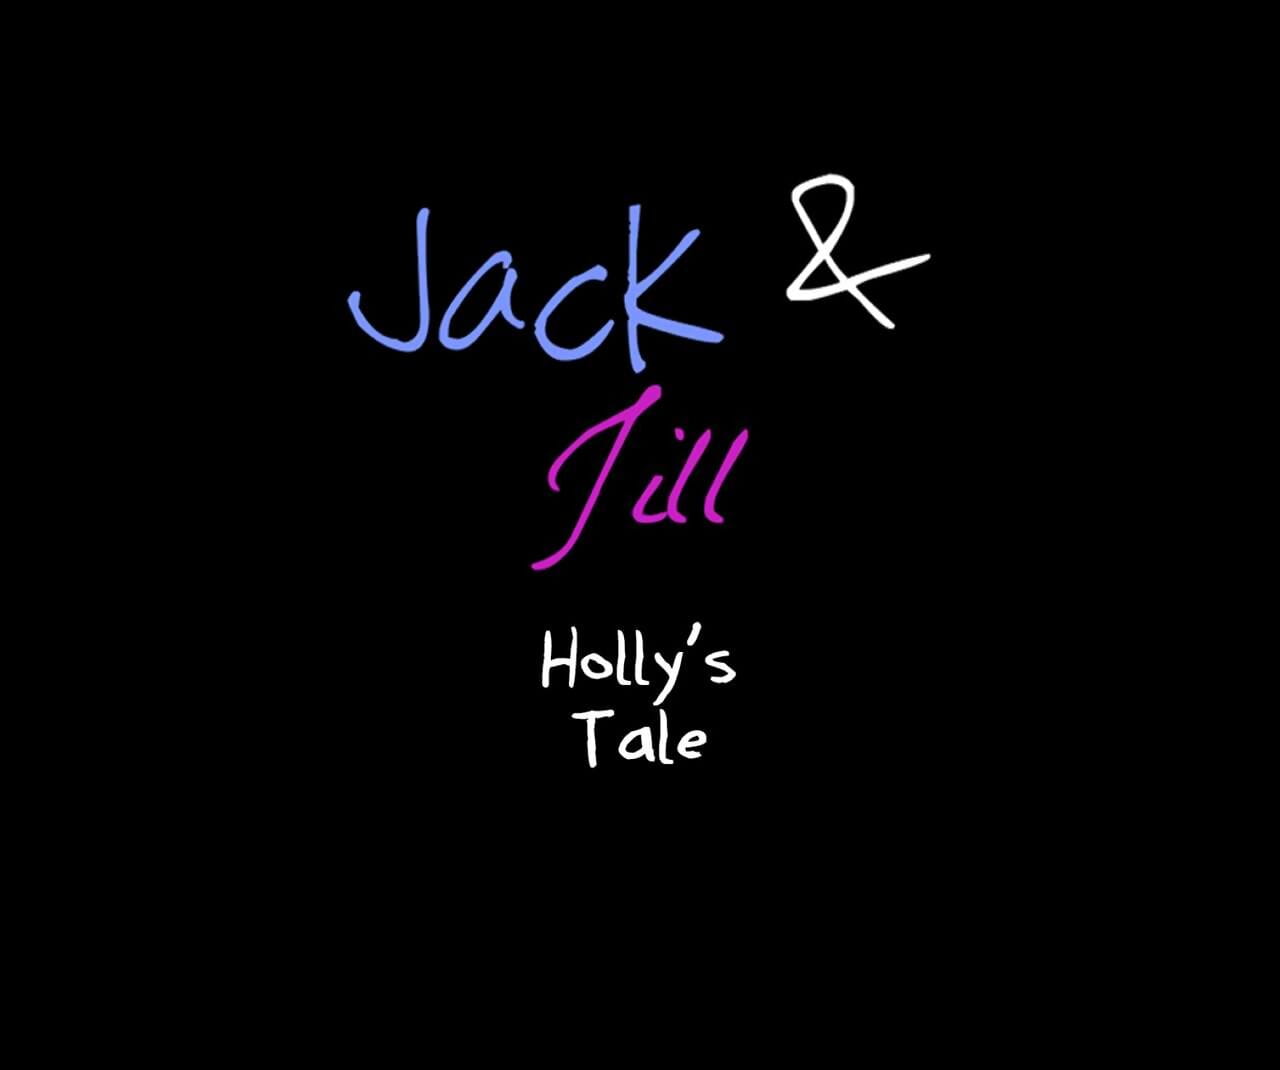 jack 和 jill 豪丽斯 故事 page 1